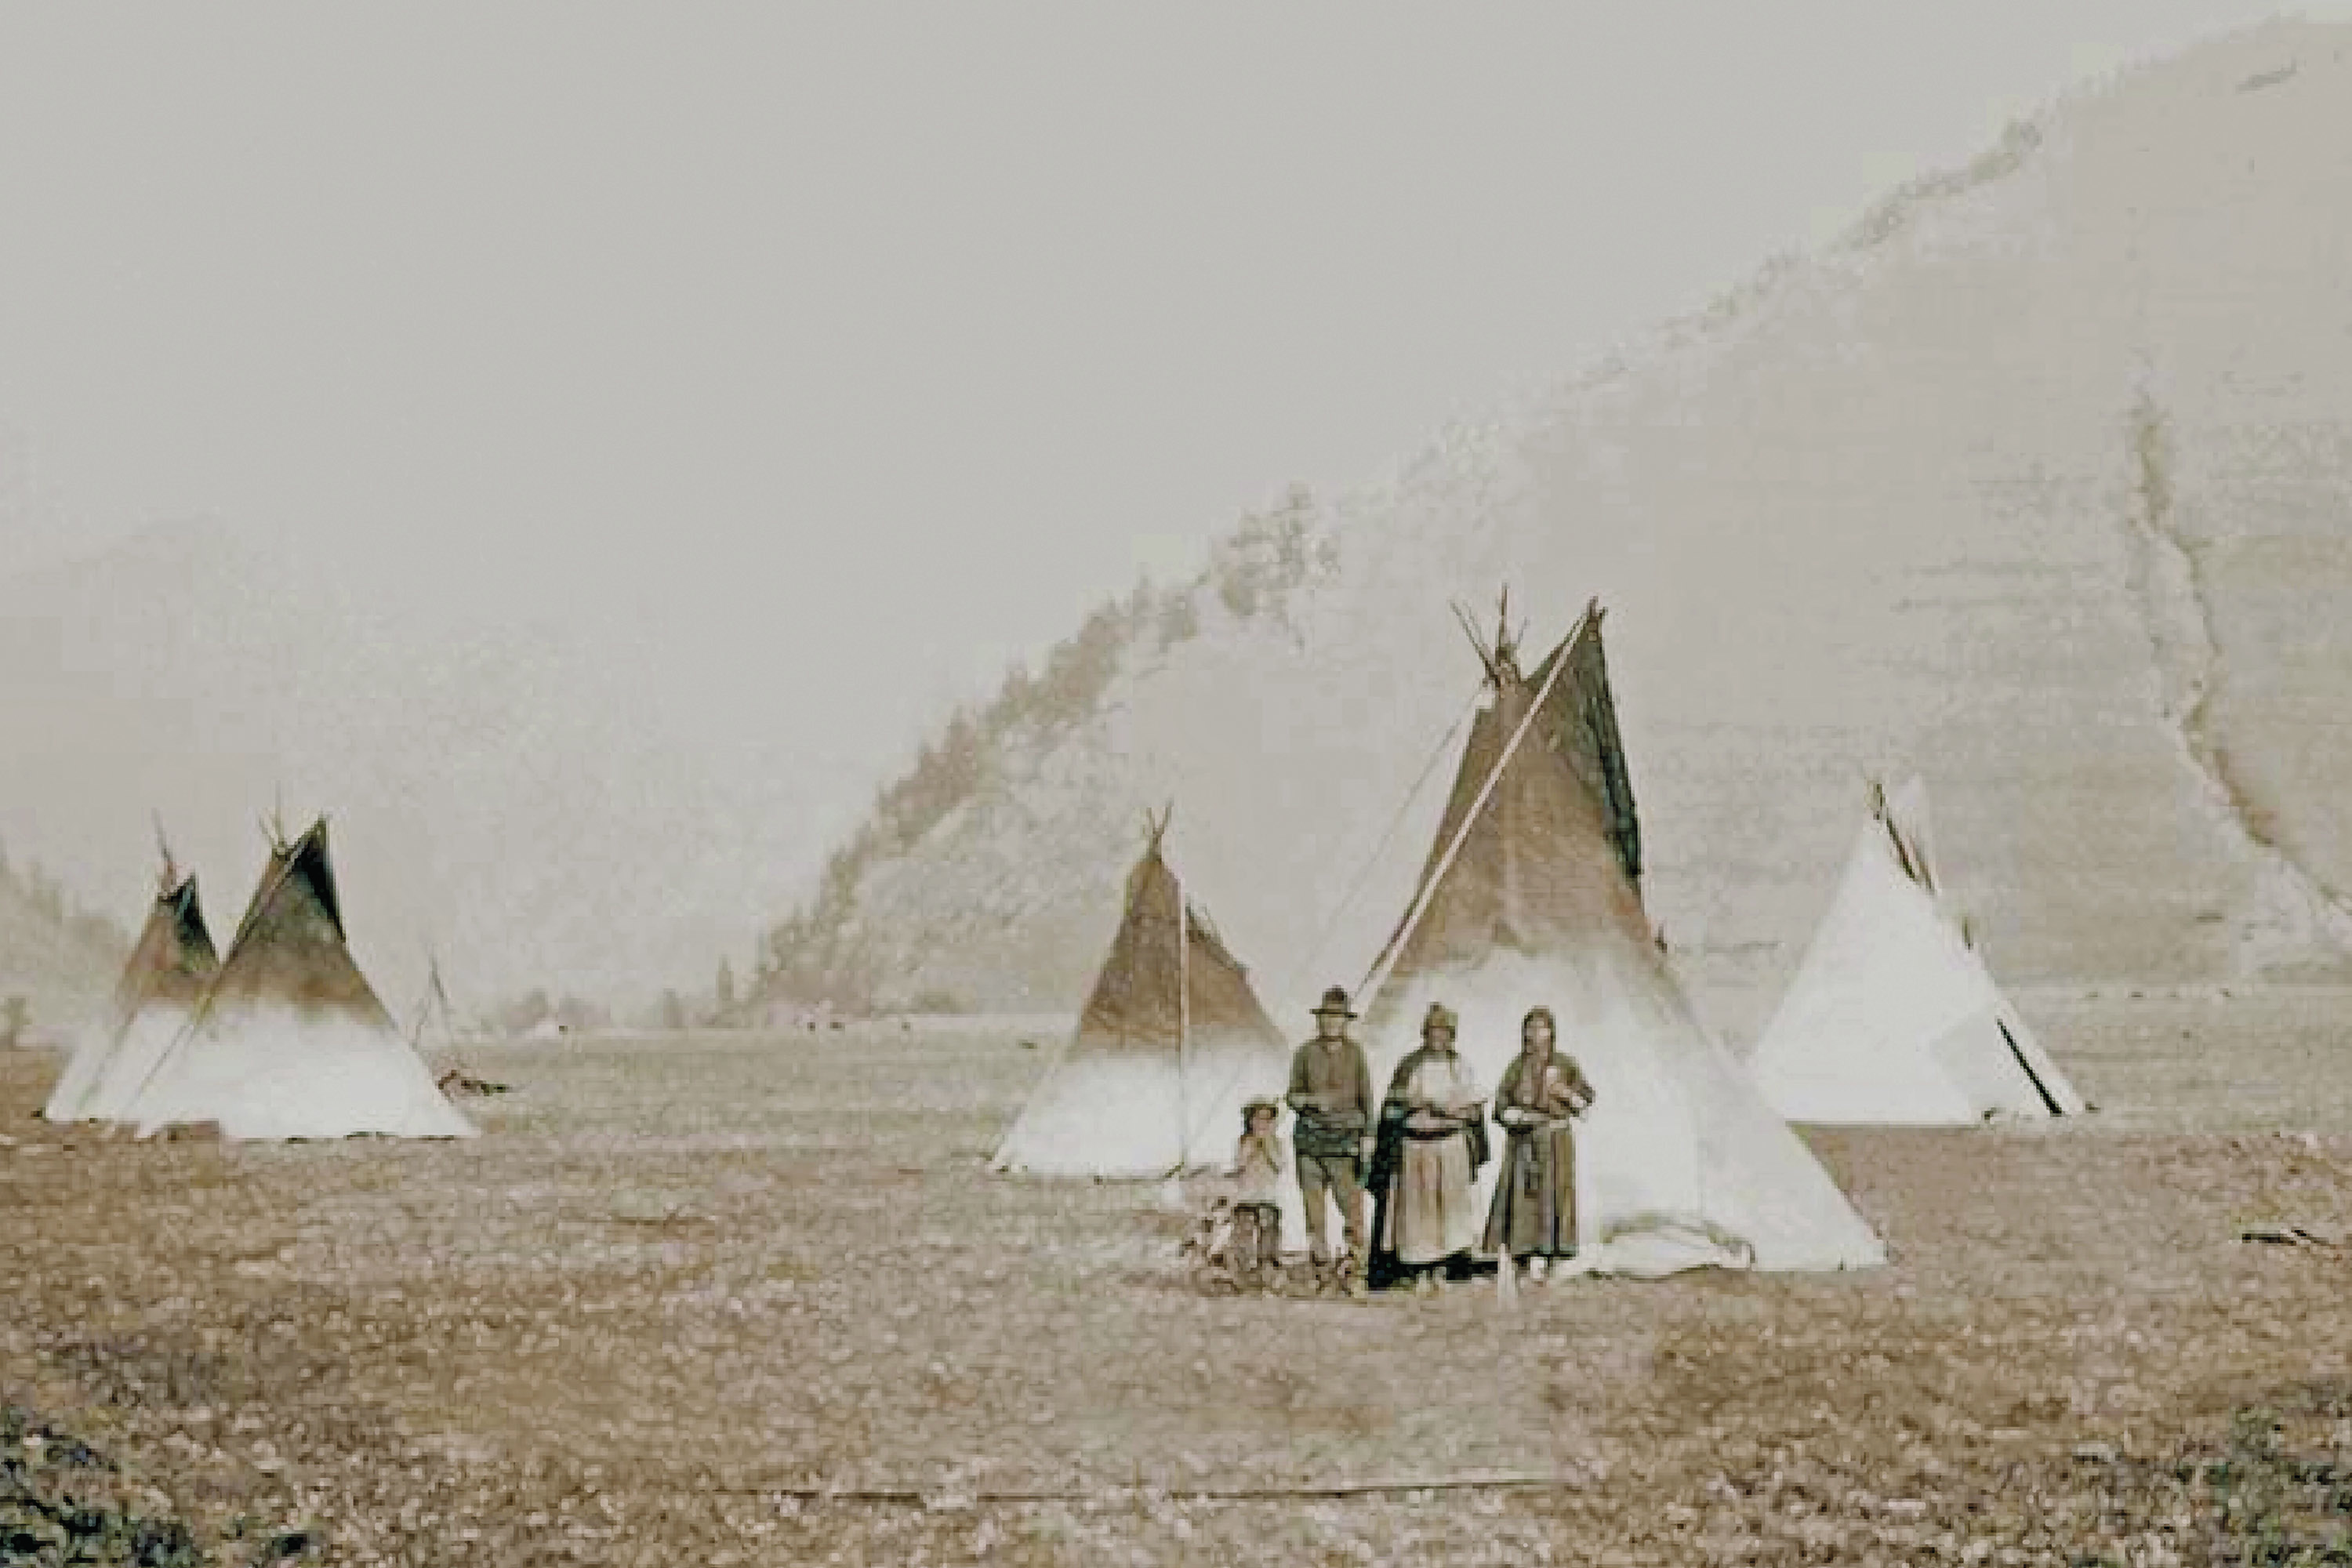 Salish encampment on land that is now UM campus, circa 1900.